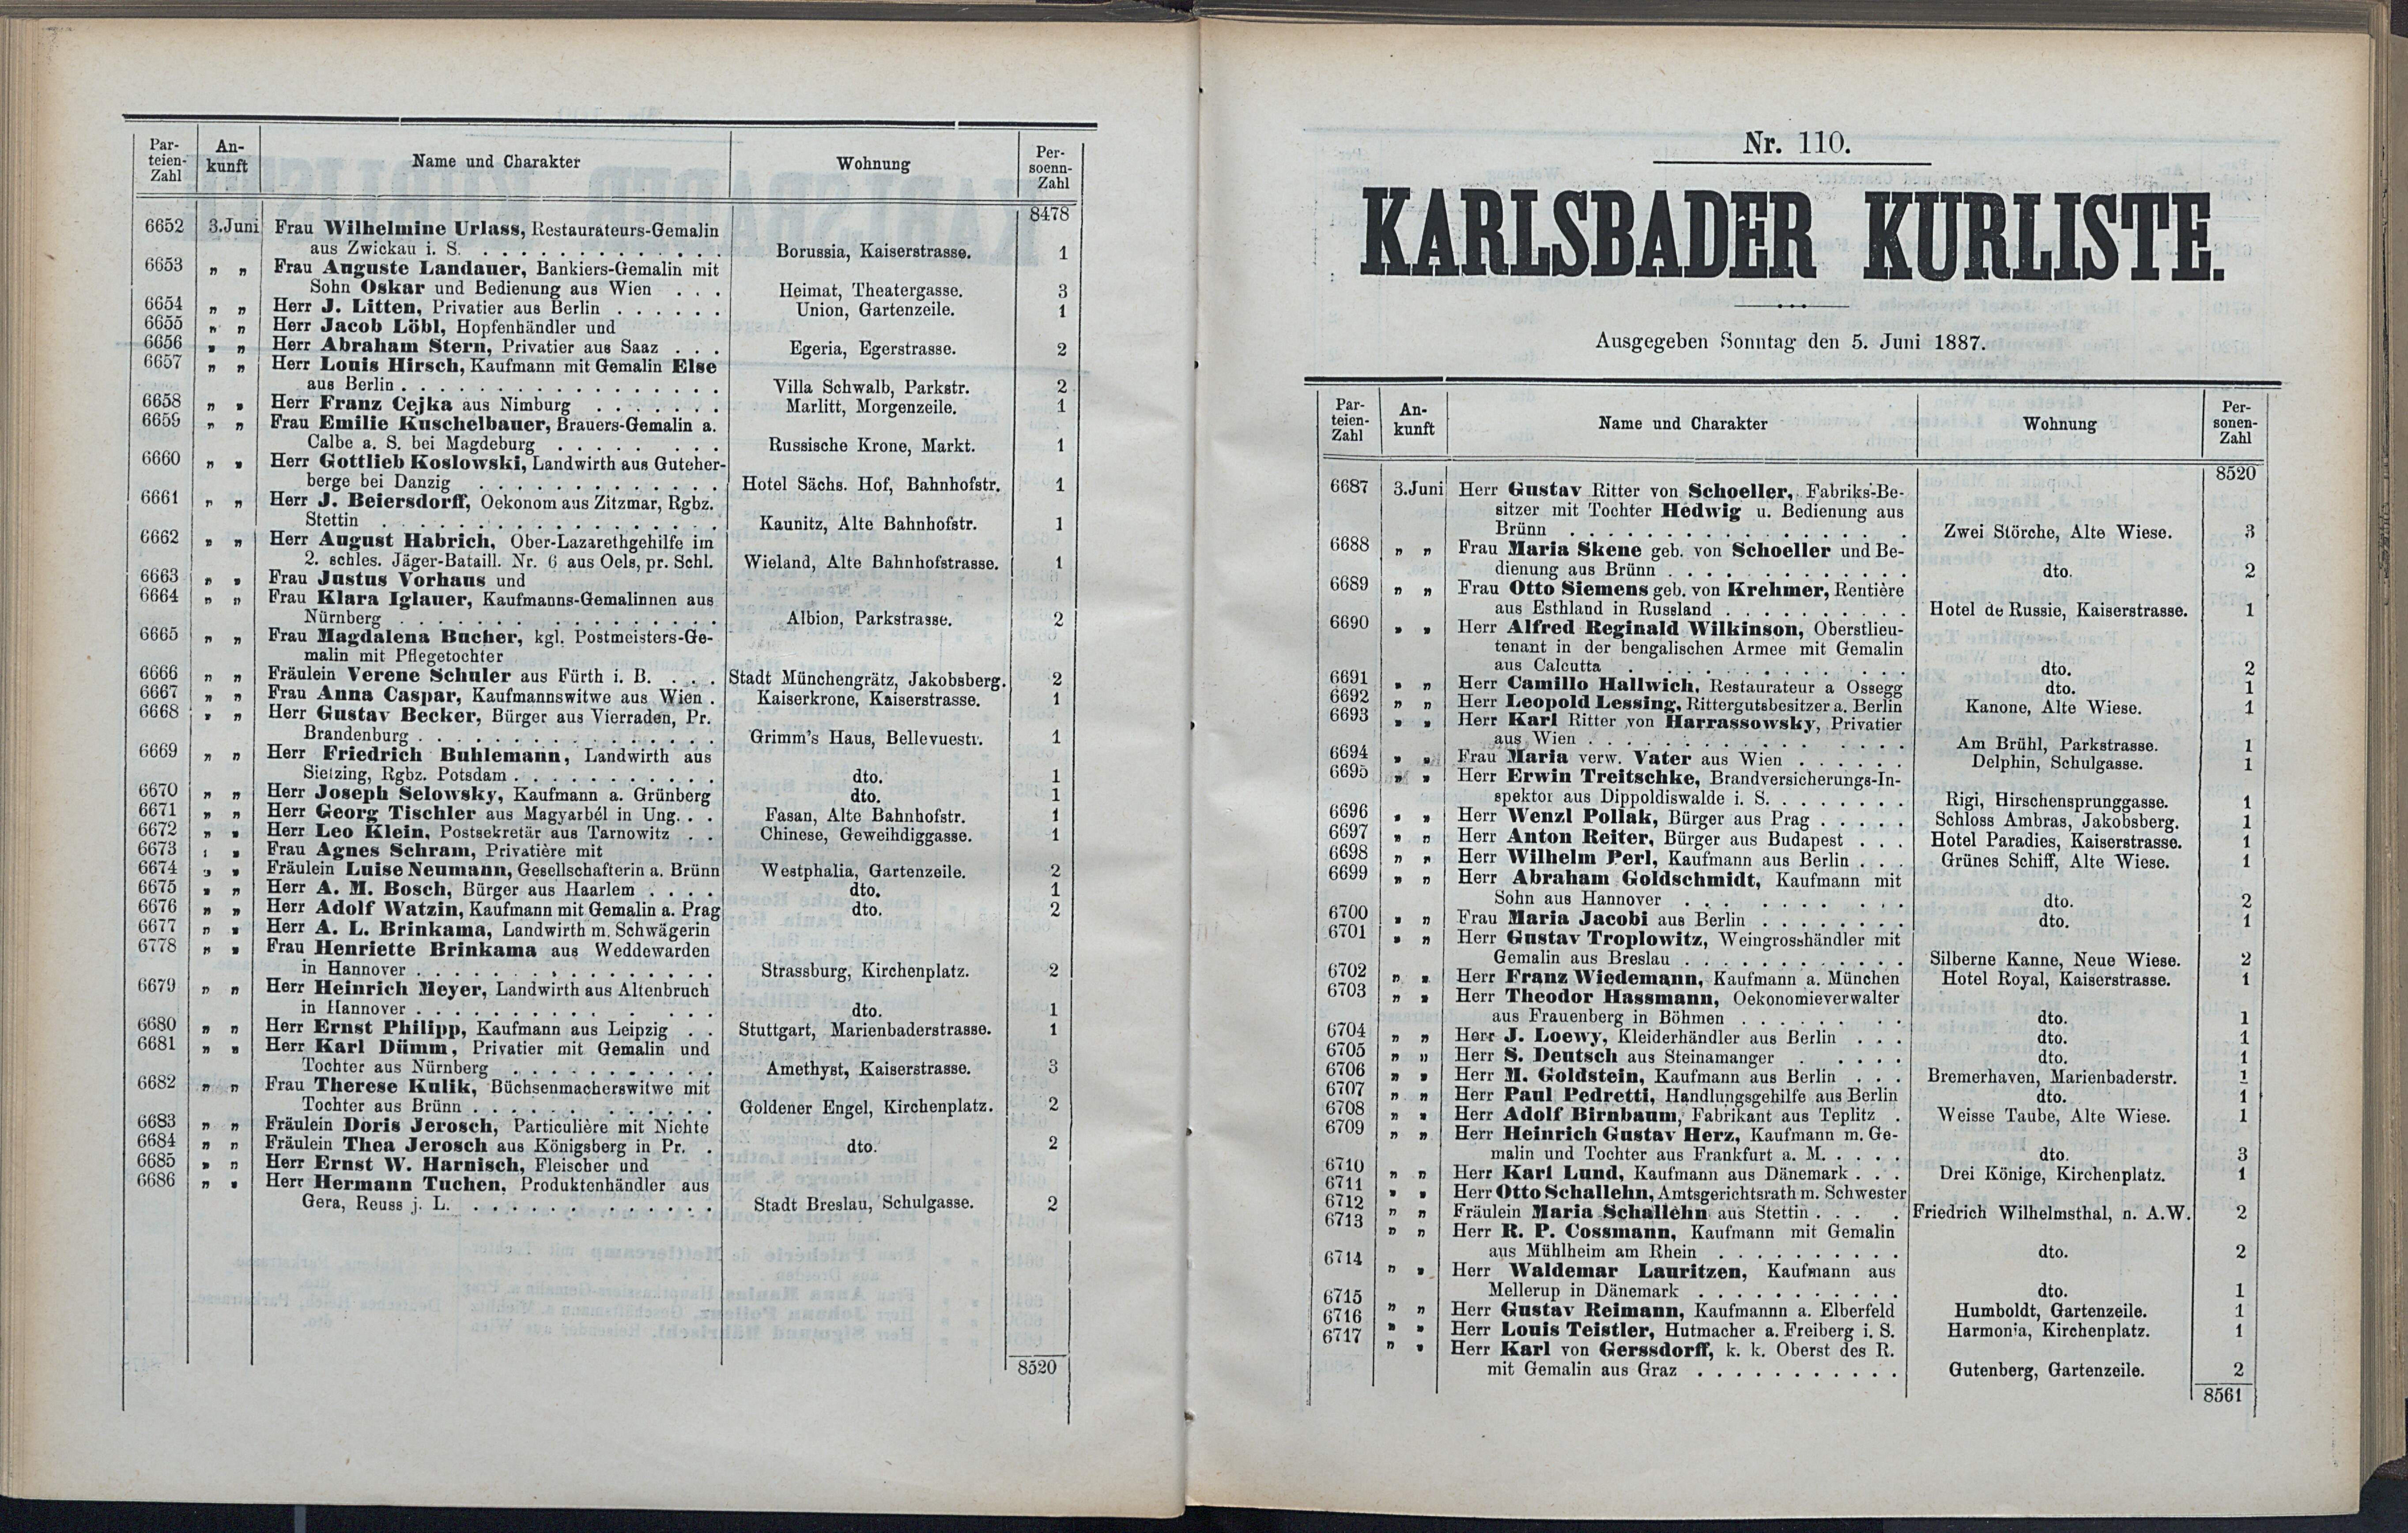 163. soap-kv_knihovna_karlsbader-kurliste-1887_1640